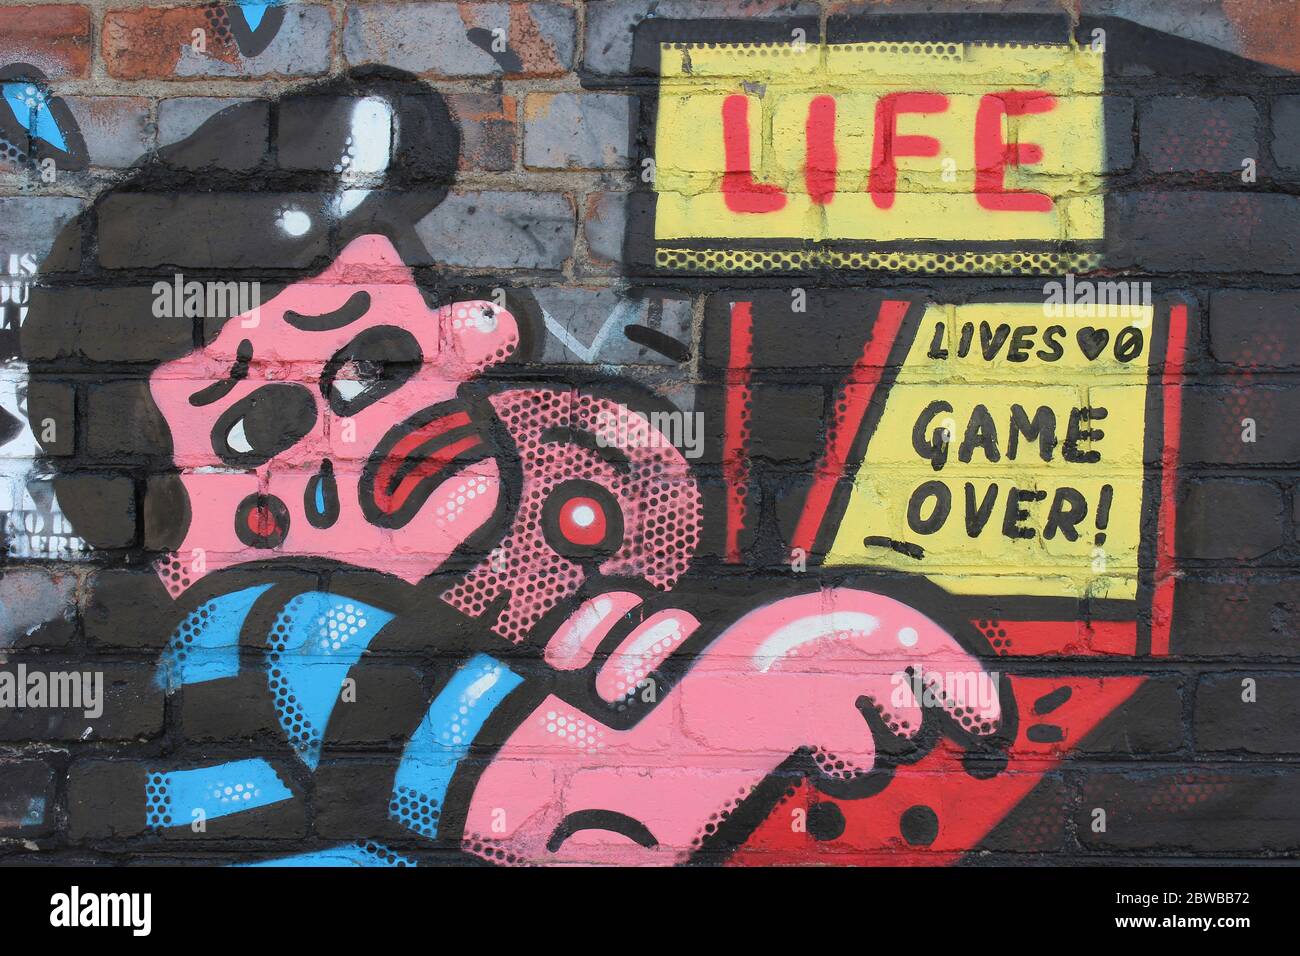 Life - Game Over Street Art Stock Photo